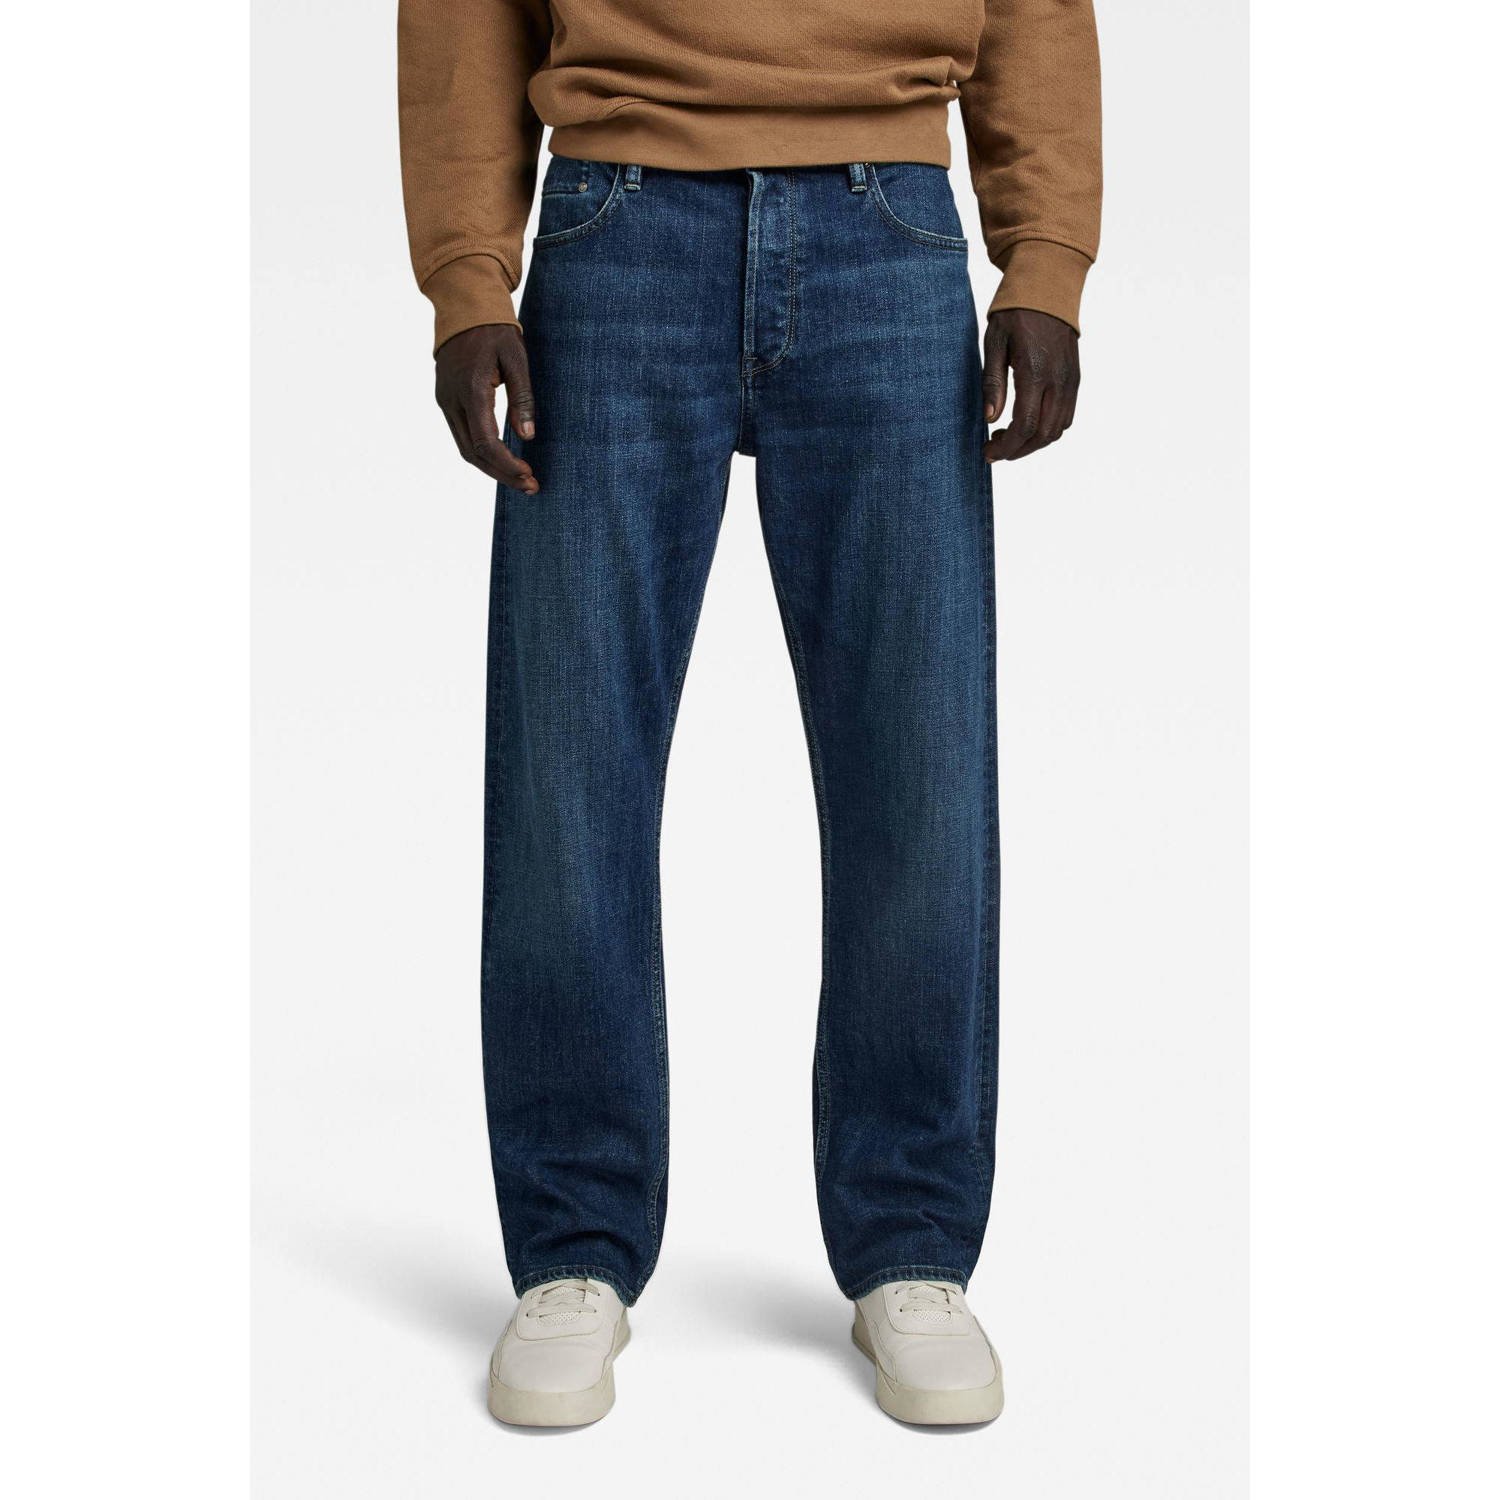 G-Star RAW Dakota straight fit jeans worn in sentry blue